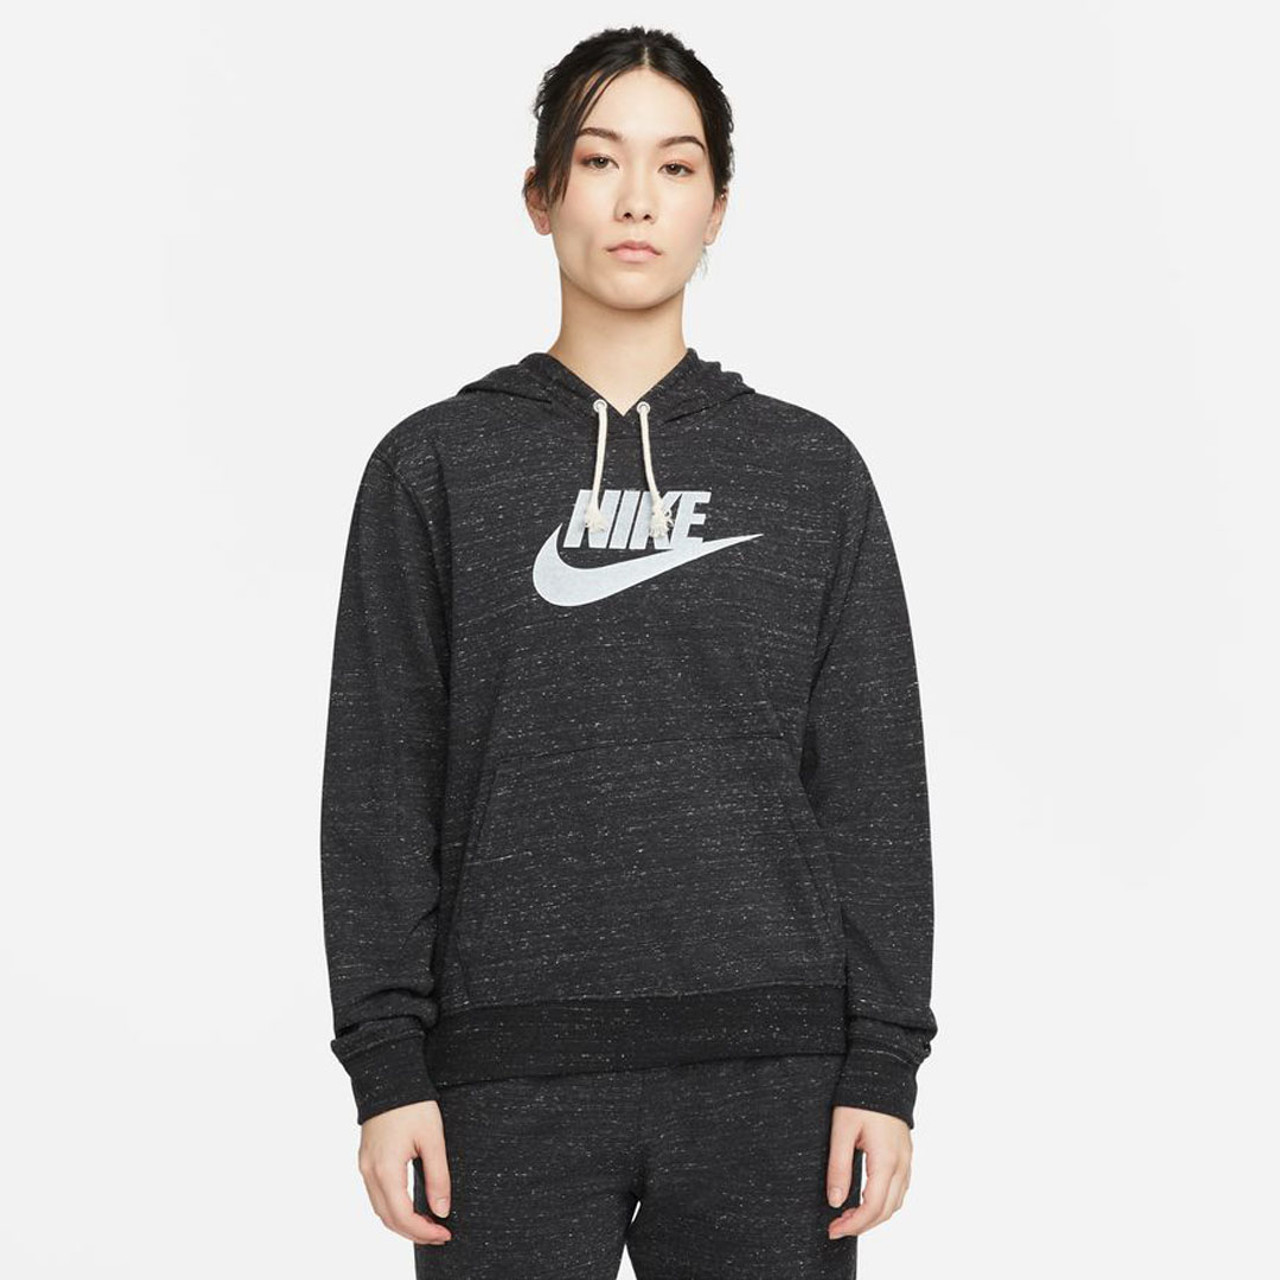 Nike Women's Sportswear Gym Vintage Pullover Hoodie $ 65